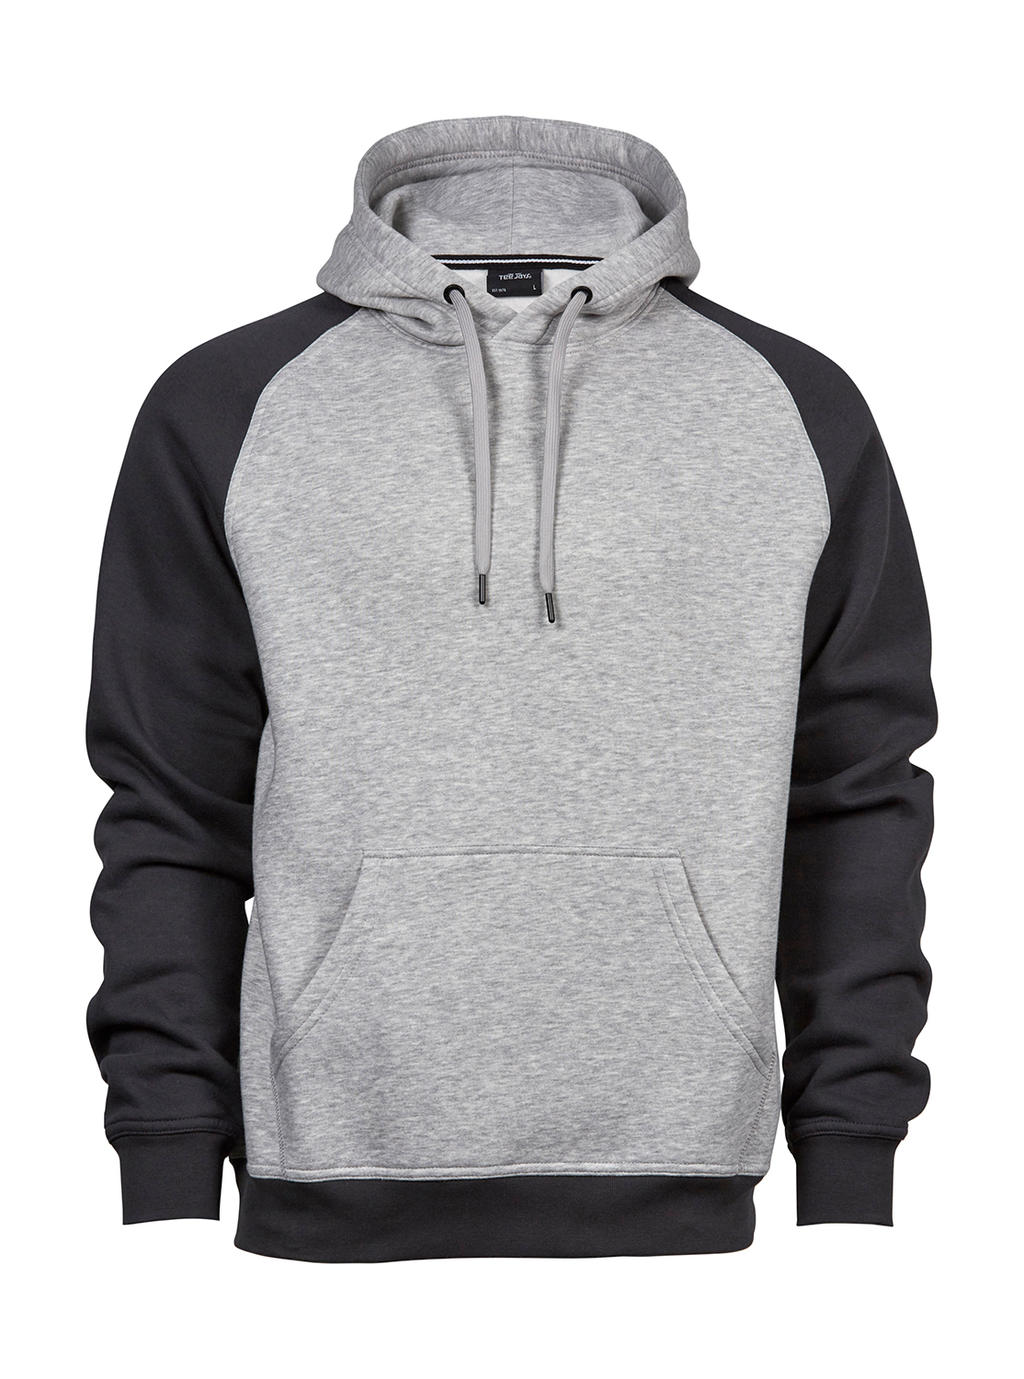  Two-Tone Hooded Sweatshirt in Farbe Heather/Dark Grey